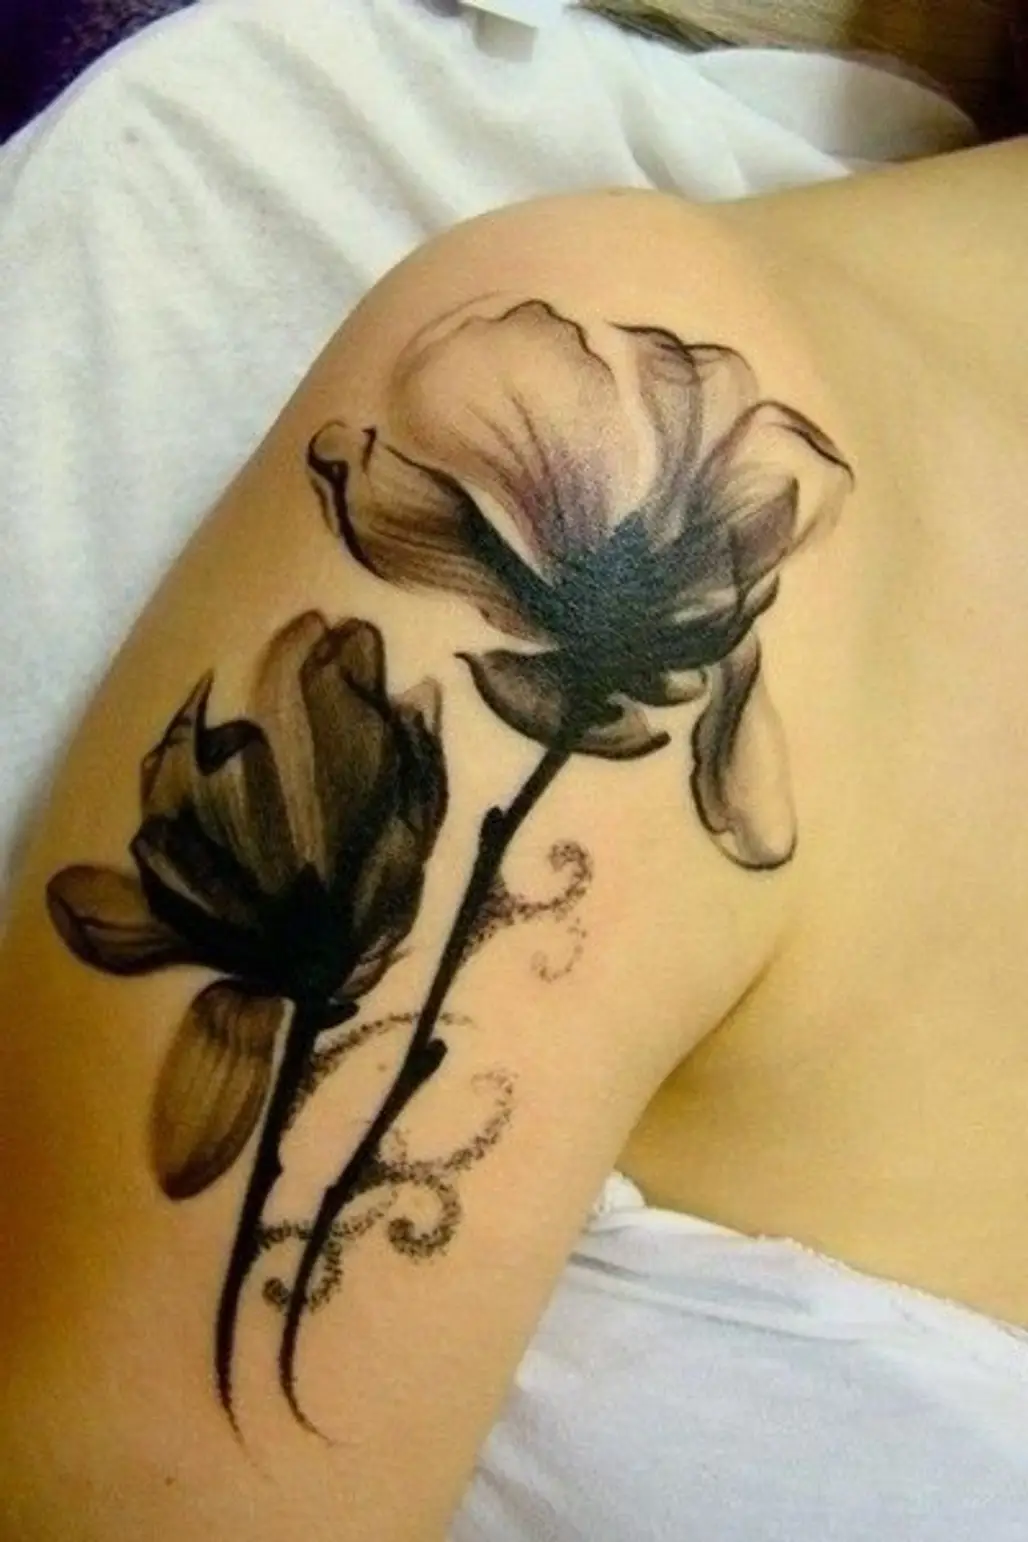 tattoo,arm,flower,drawing,sketch,